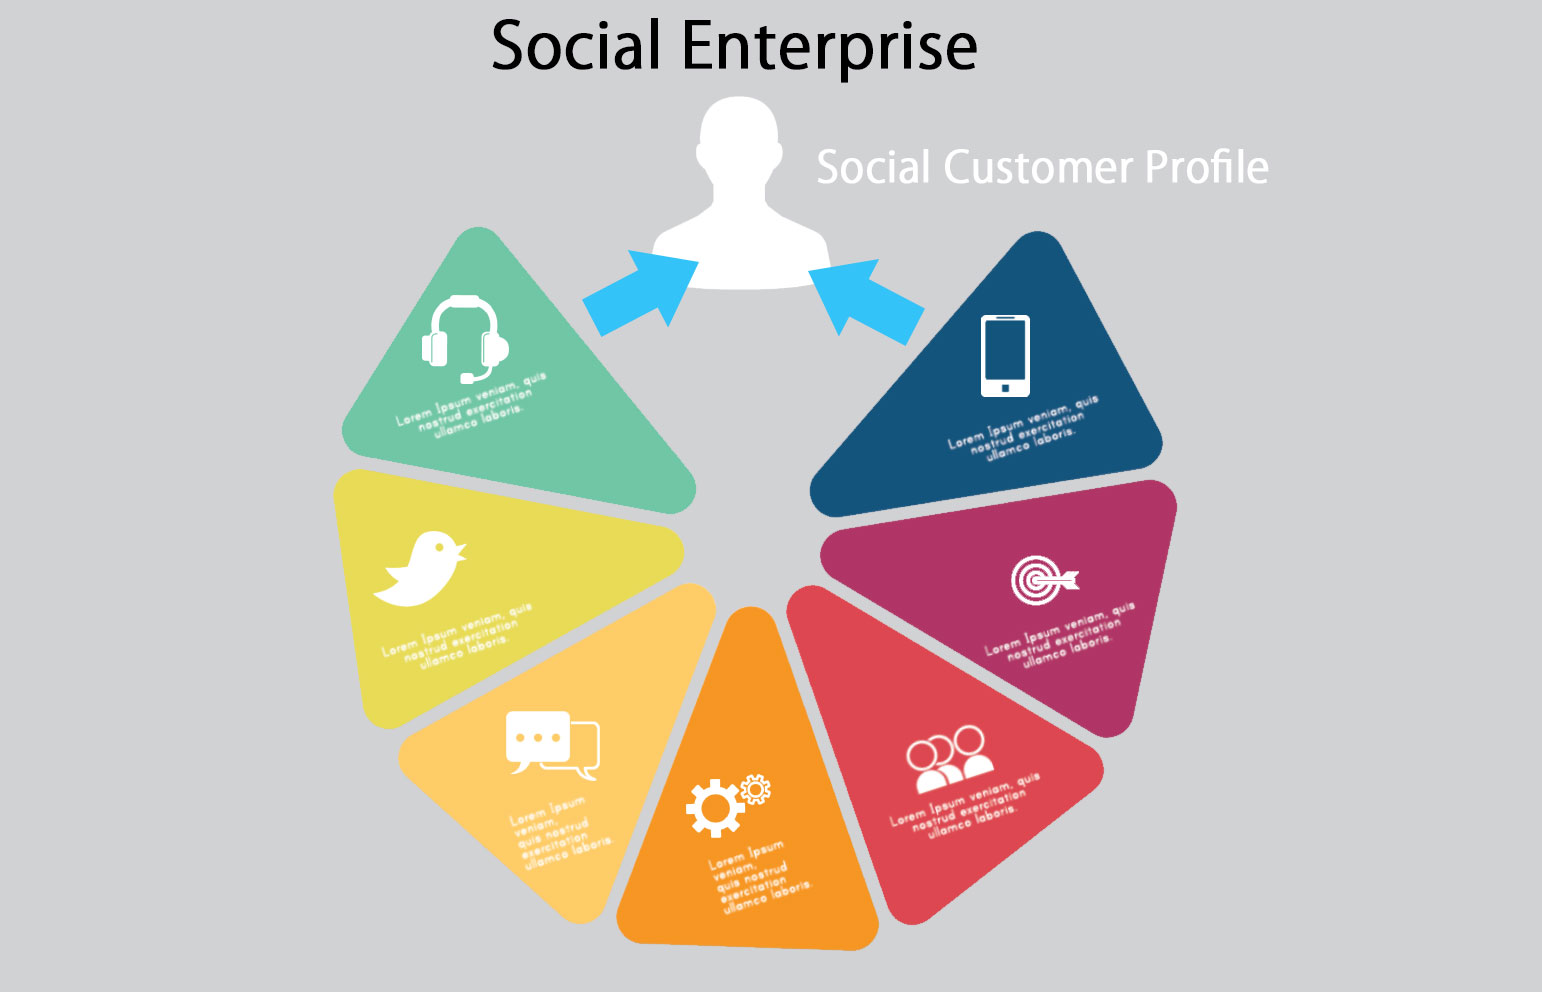 What is Salesforce technology - Social Enterprise